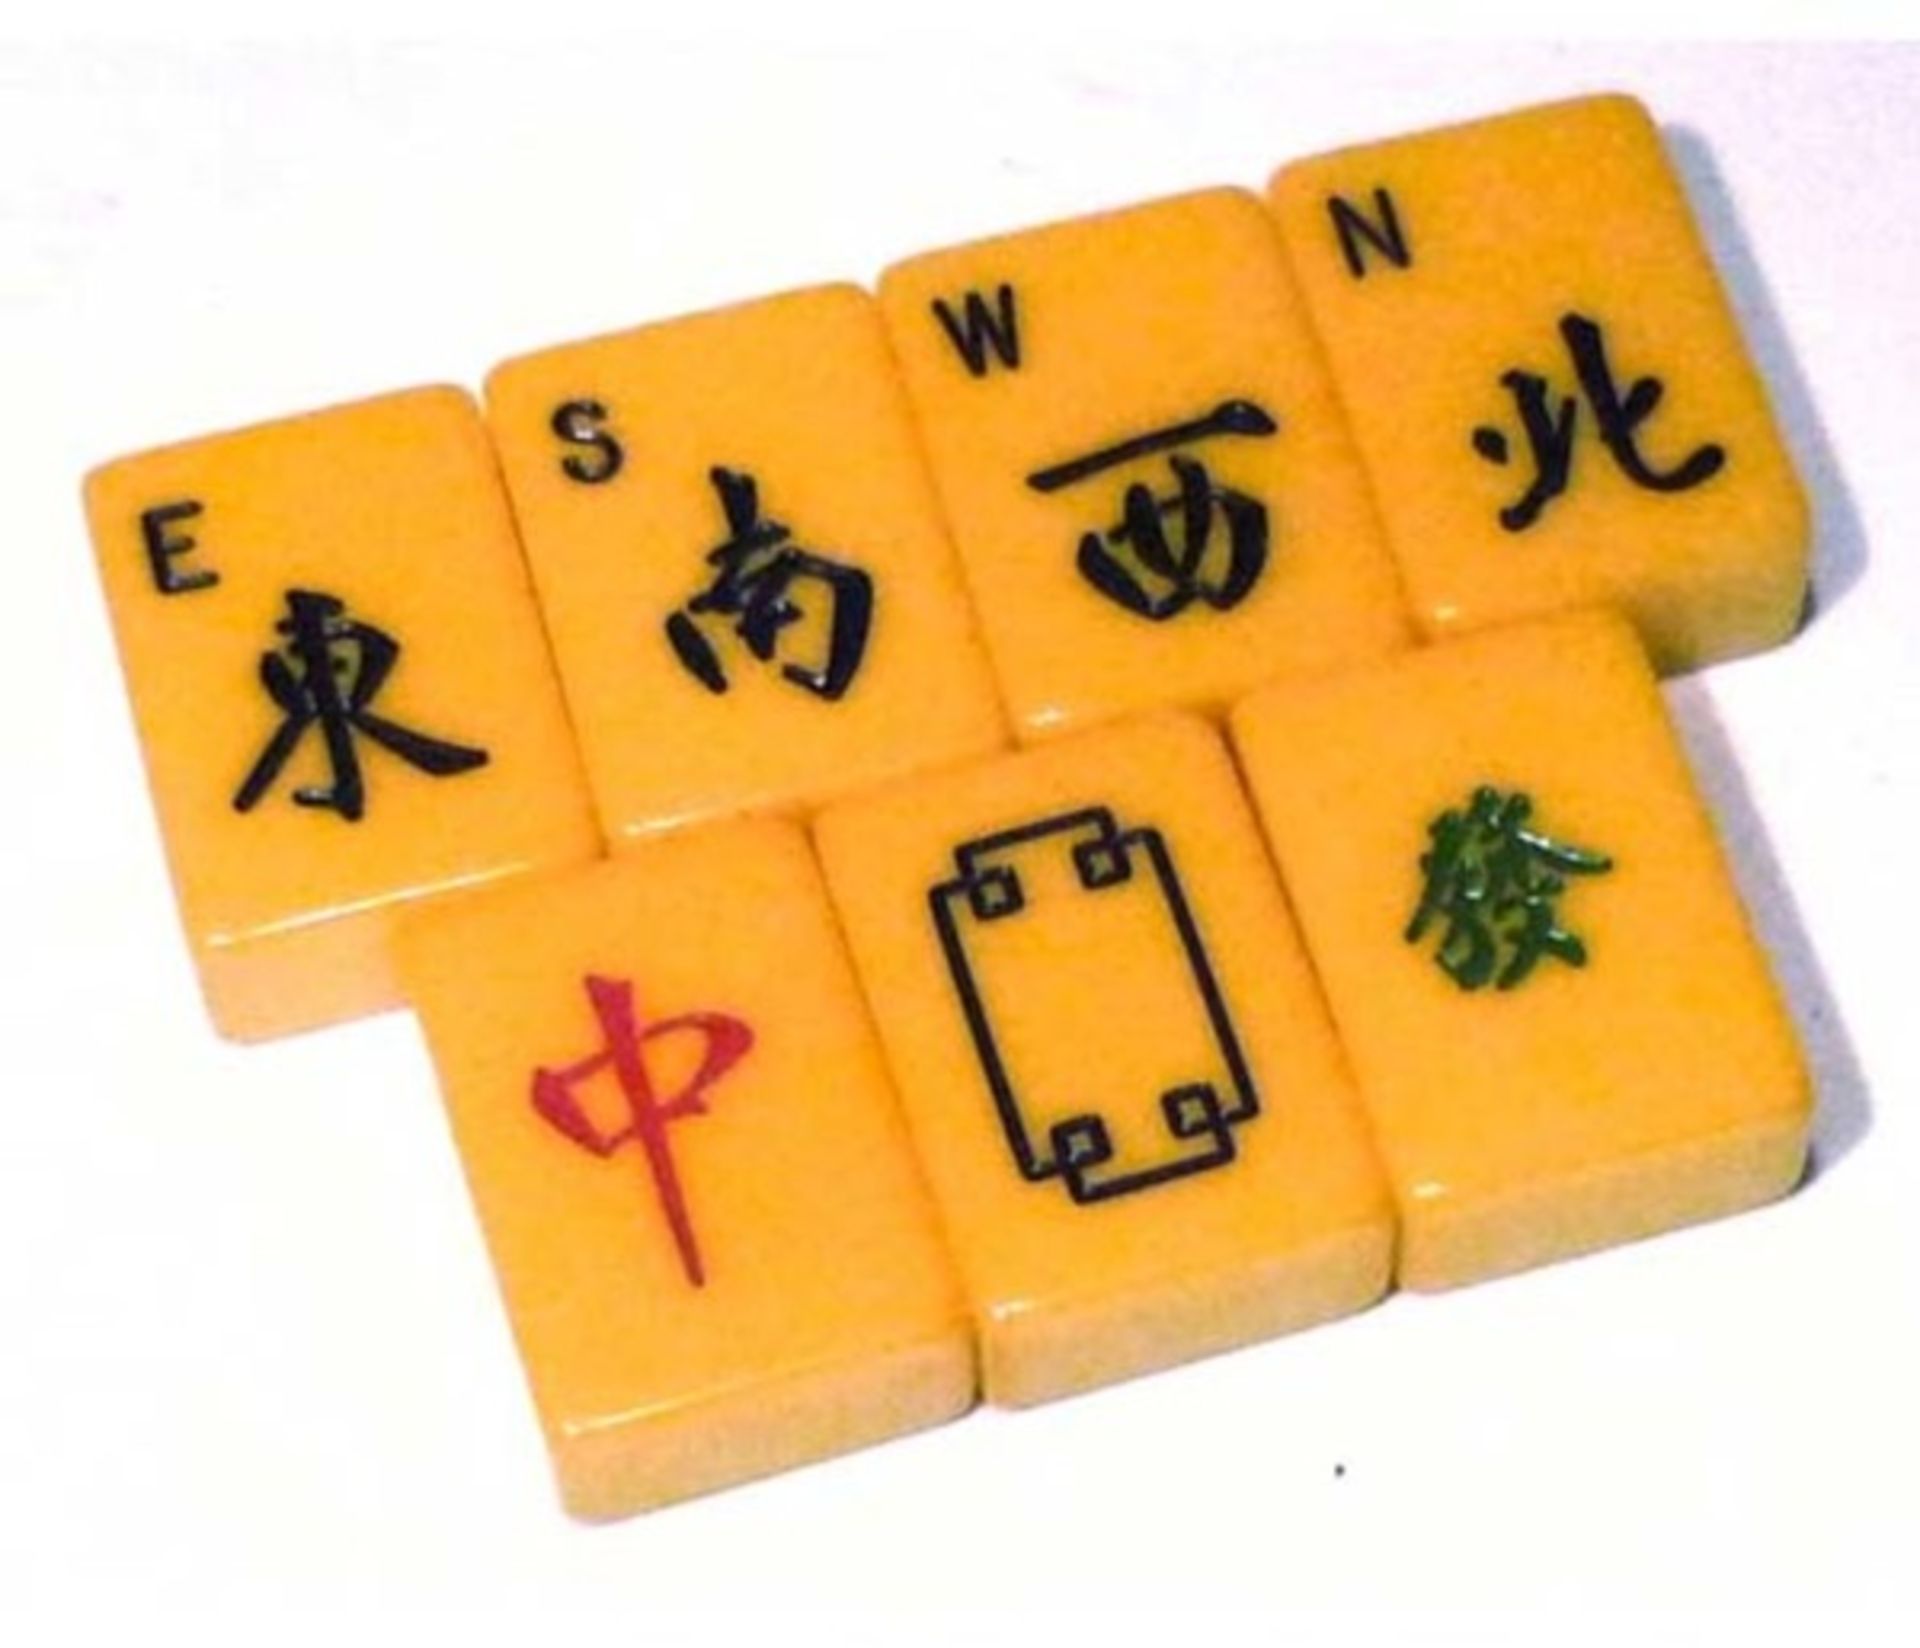 (Mahjong) Mahjong kunststof, Royal Games, ca. 1930 - Bild 11 aus 12